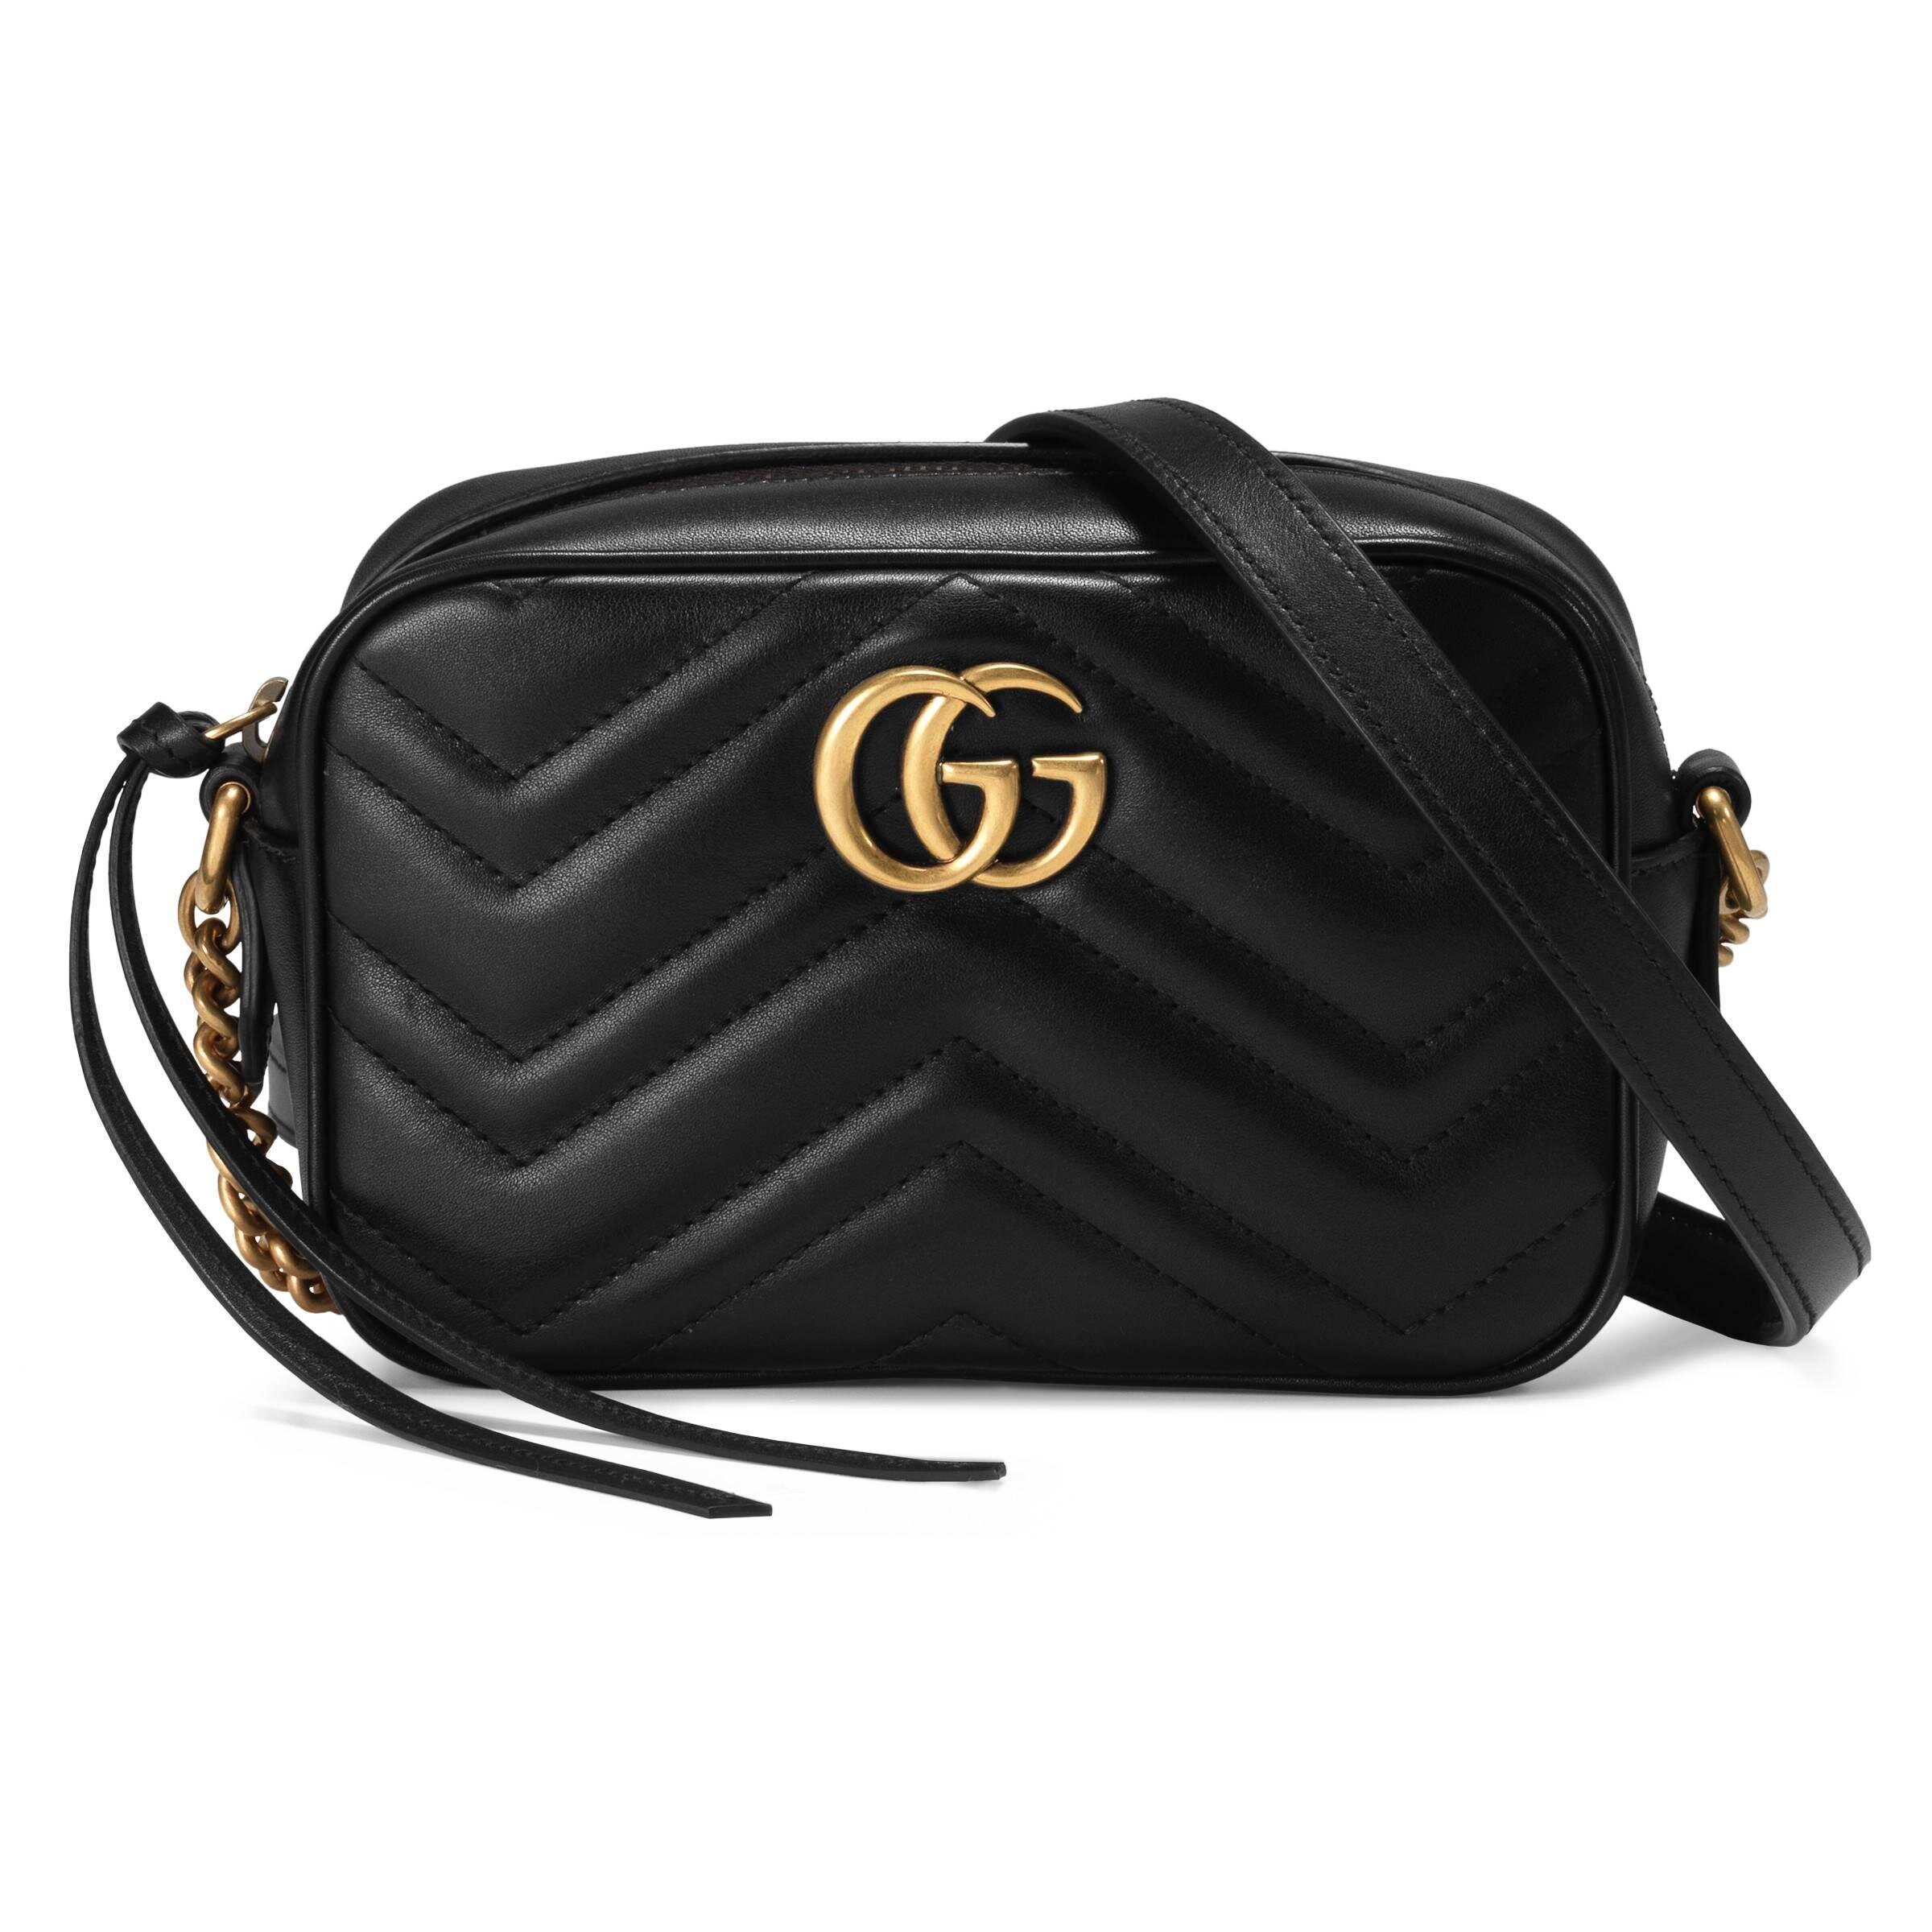 Gucci GG Marmont Mini Bag in Black Matelassé Chevron Leather.jpg